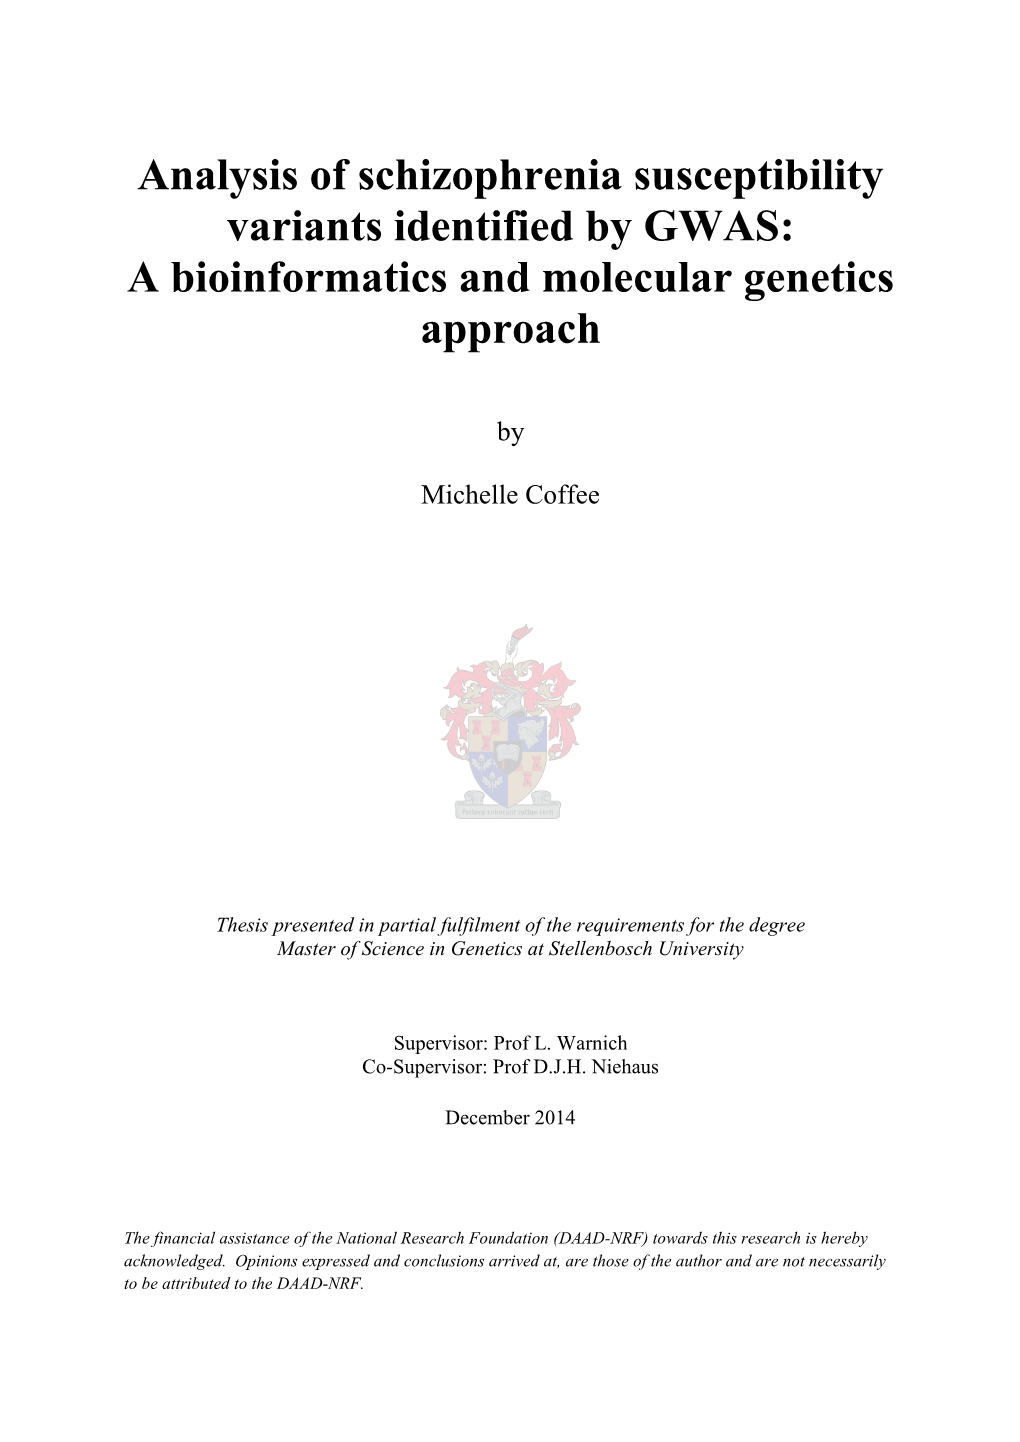 Analysis of Schizophrenia Susceptibility Variants Identified by GWAS: a Bioinformatics and Molecular Genetics Approach